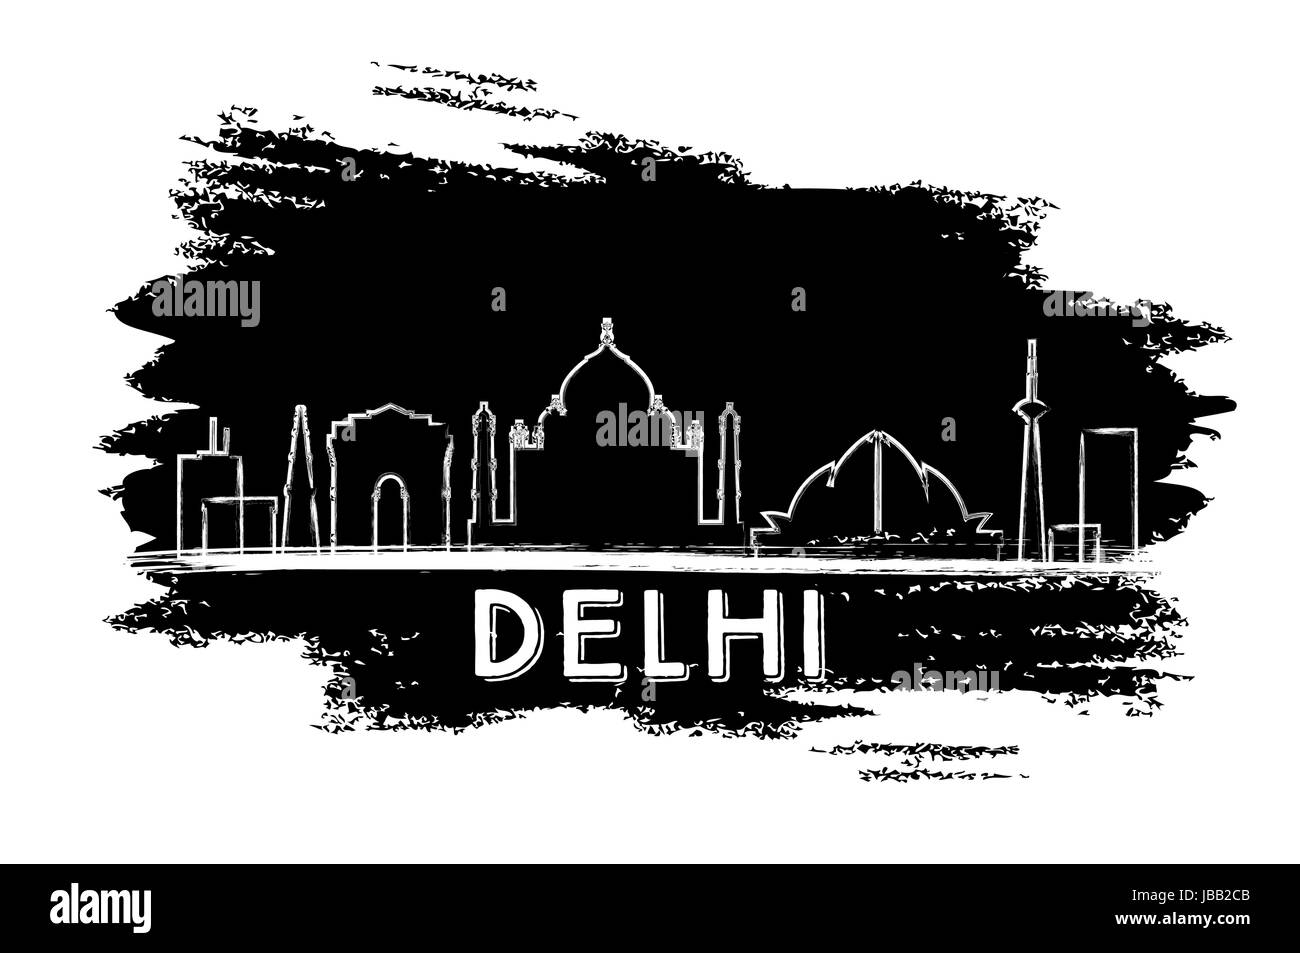 Delhi Sketch Vector Images over 230